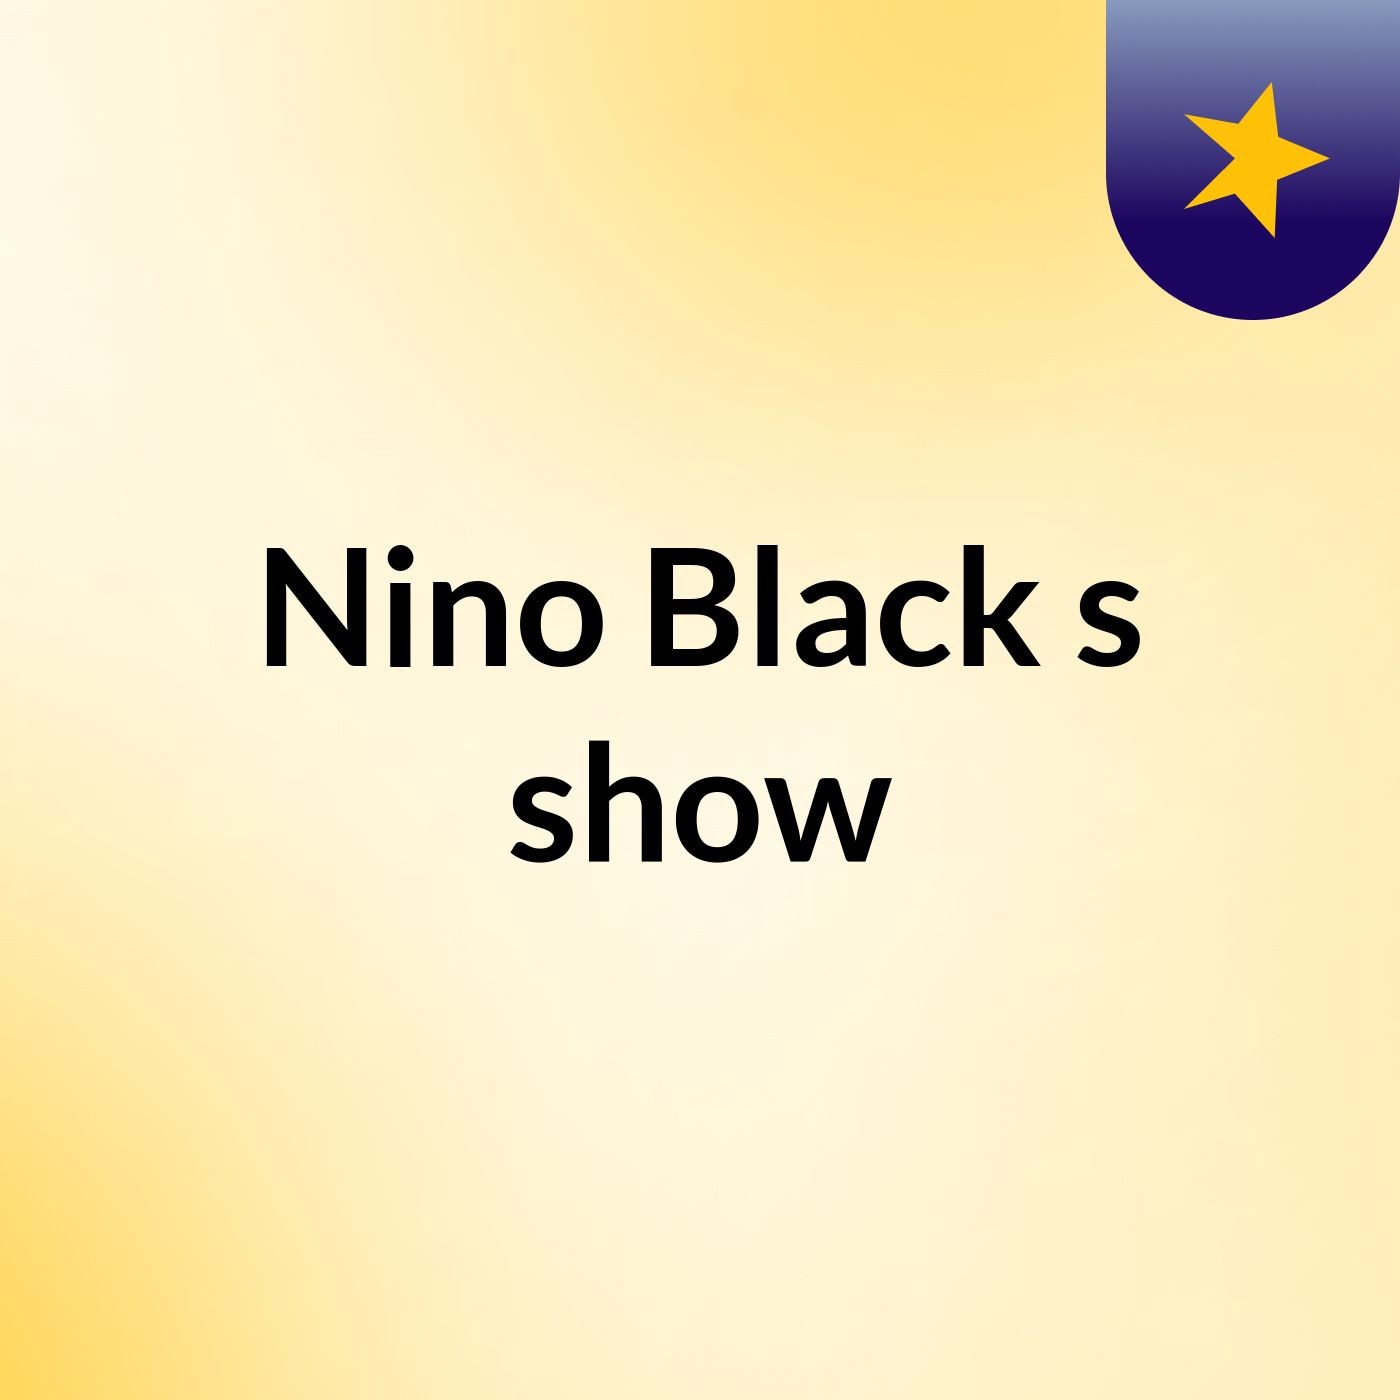 Nino Black's show